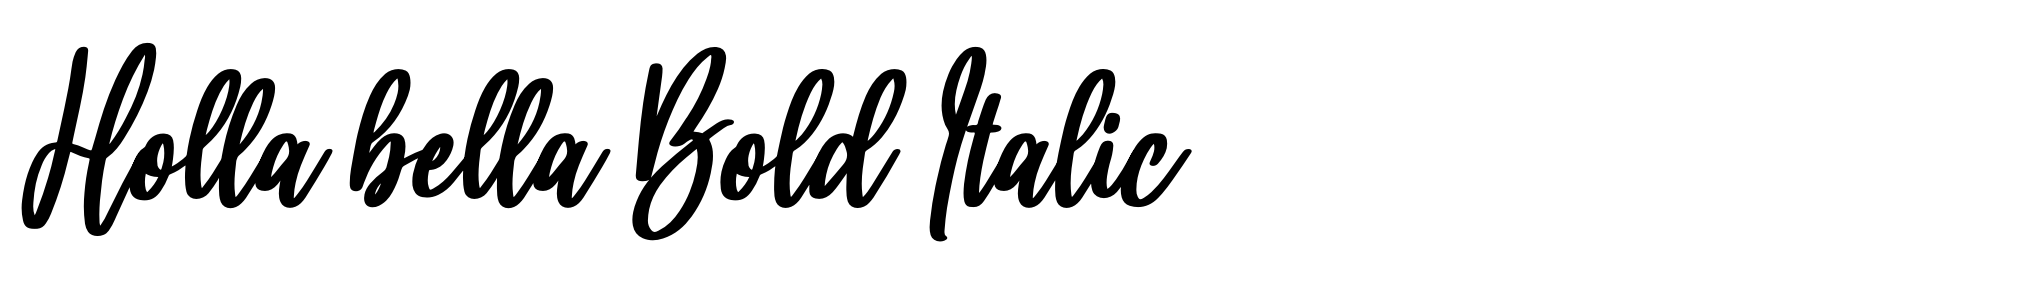 Holla bella Bold Italic image